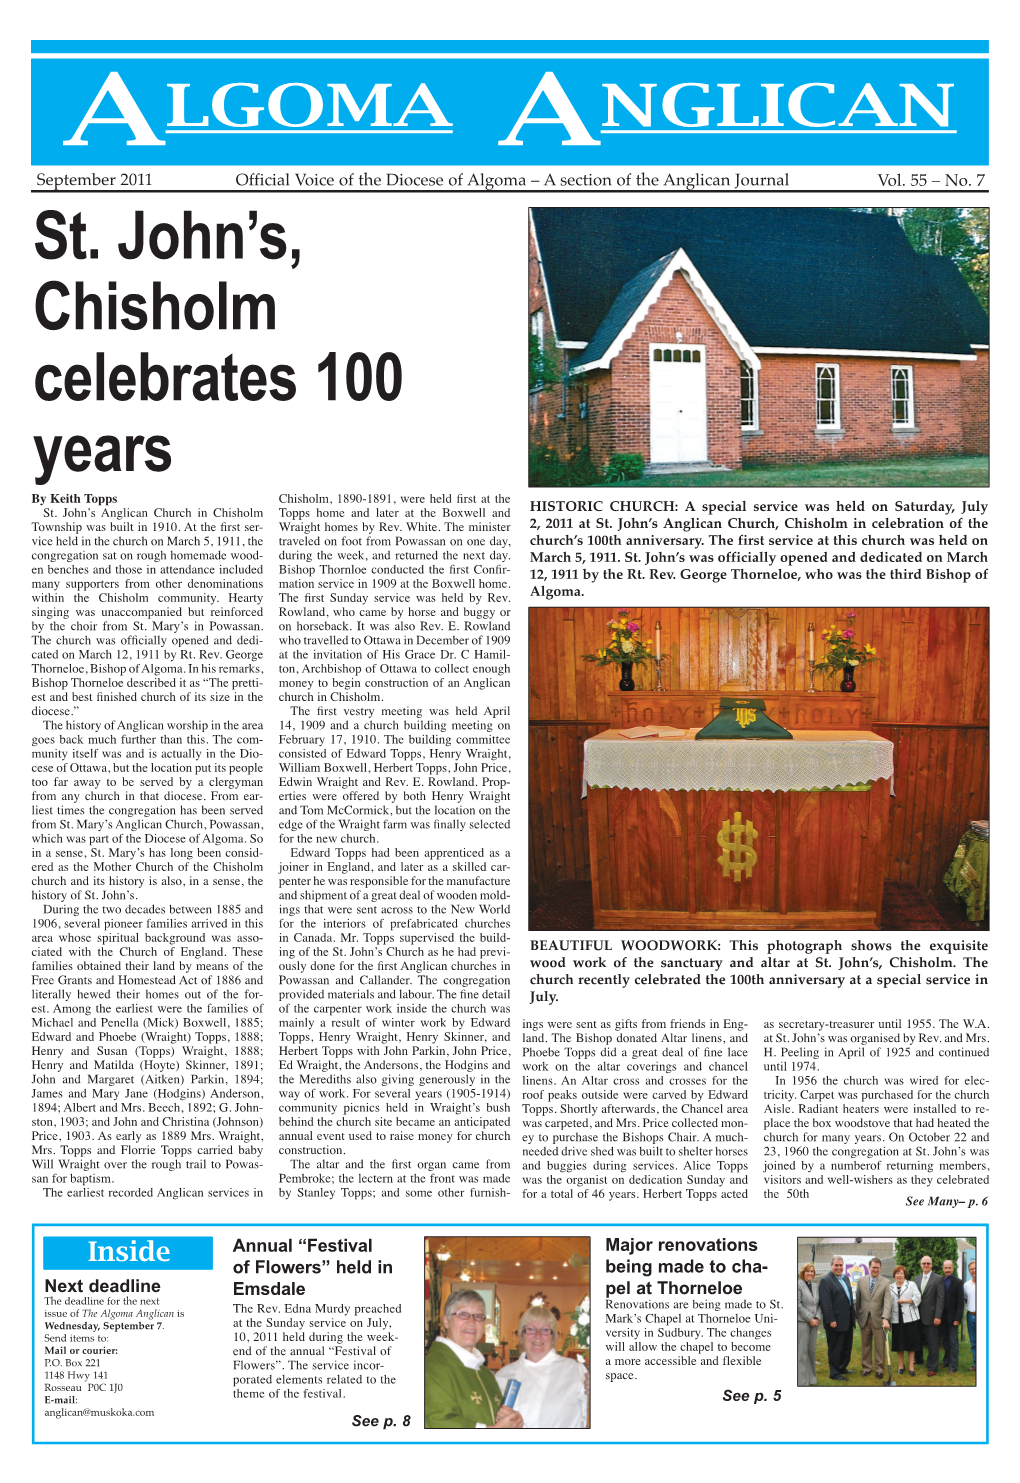 St. John's, Chisholm Celebrates 100 Years